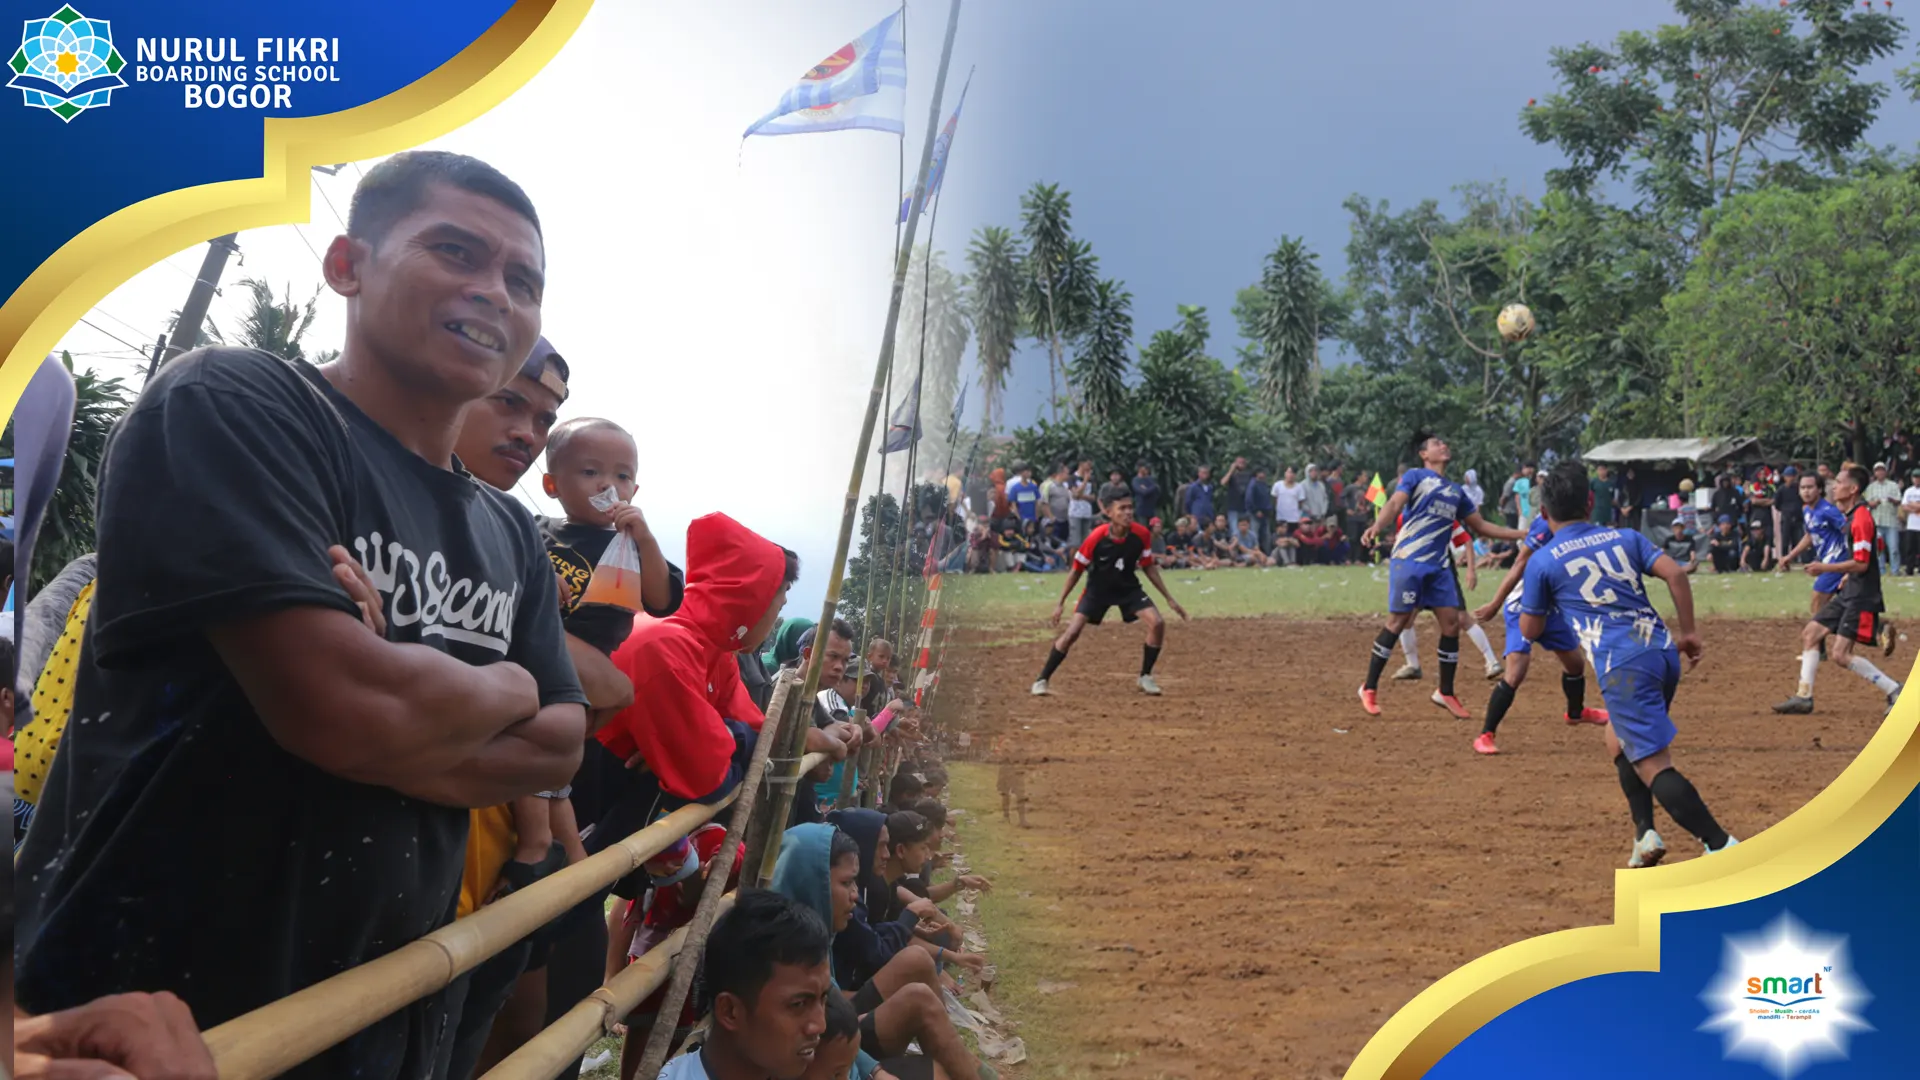 NFBS Bogor  ikuti Pertandingan Sepak Bola Persahabatan Dengan Tim PEMDES Sukajaya dalam Tournament Sukajaya Cup  2022